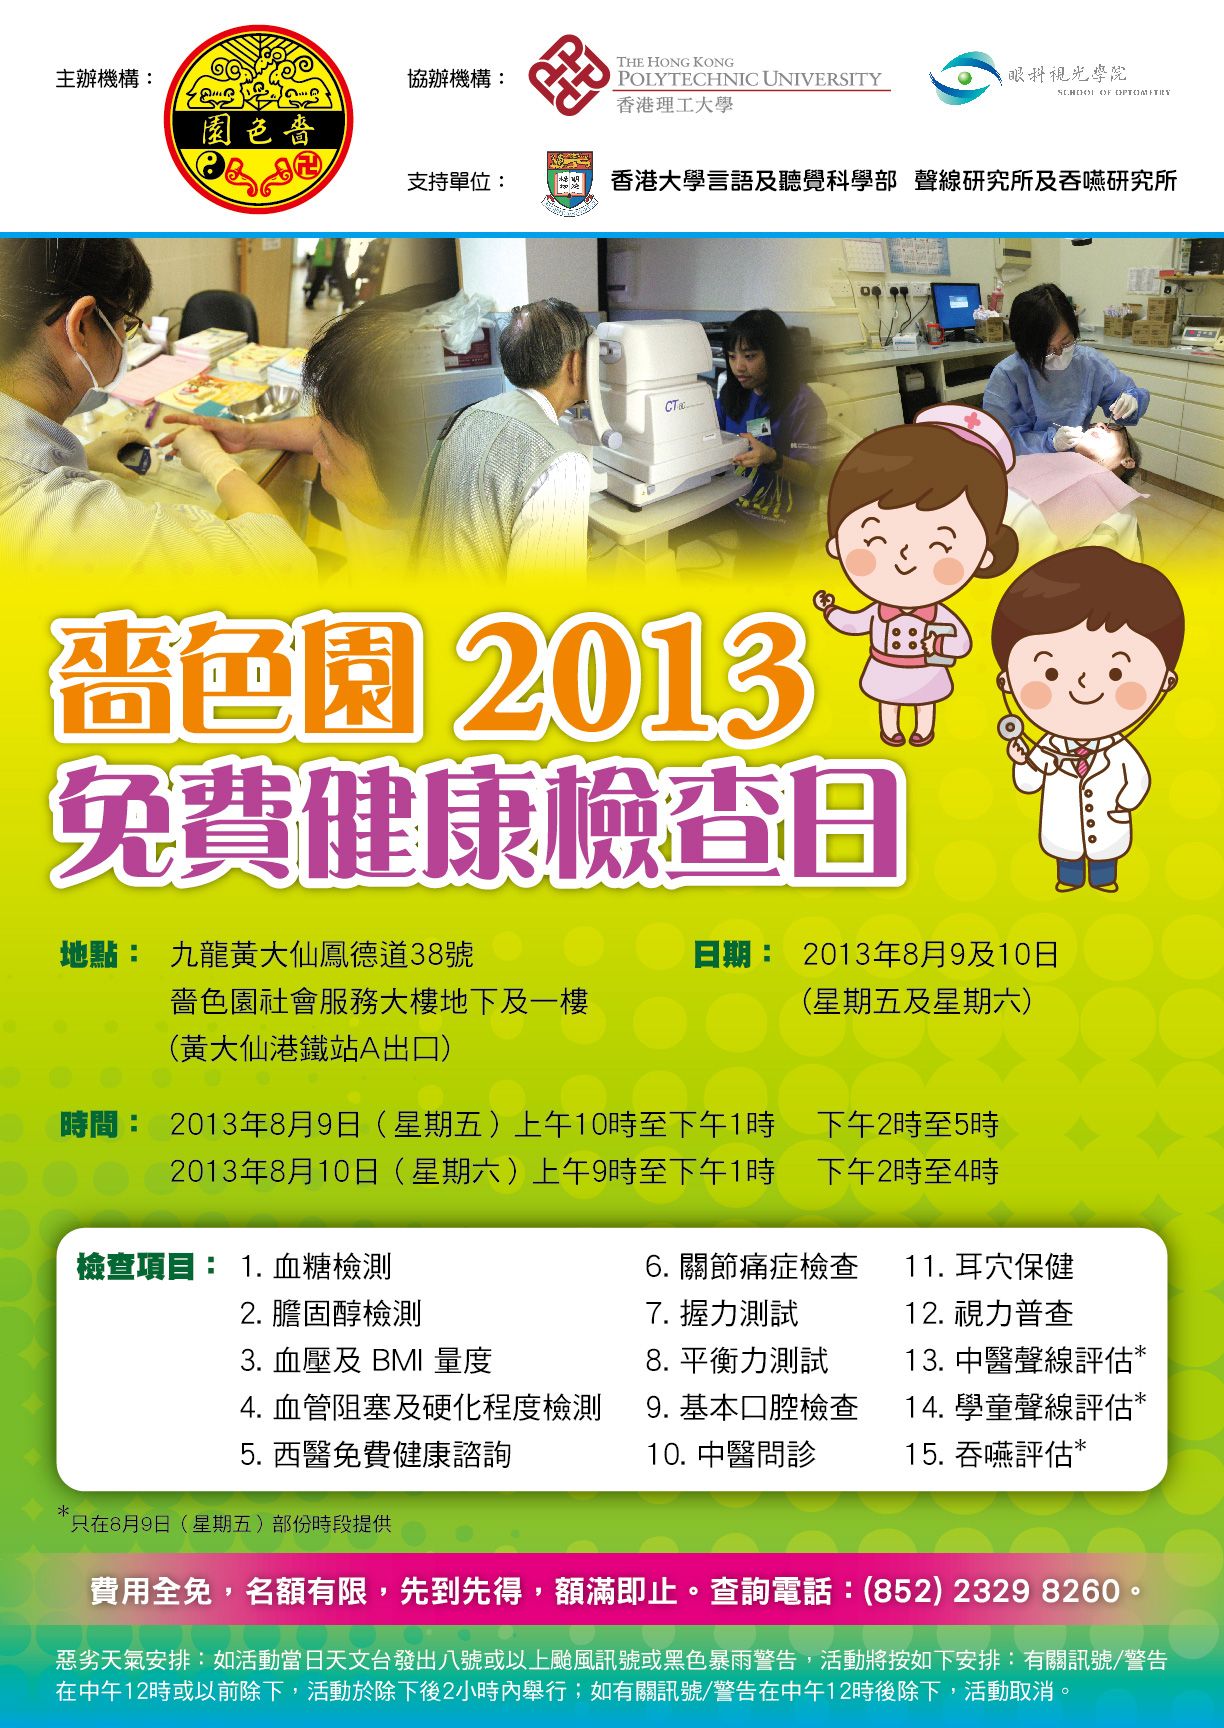 2013 Sik Sik Yuen Health Screening